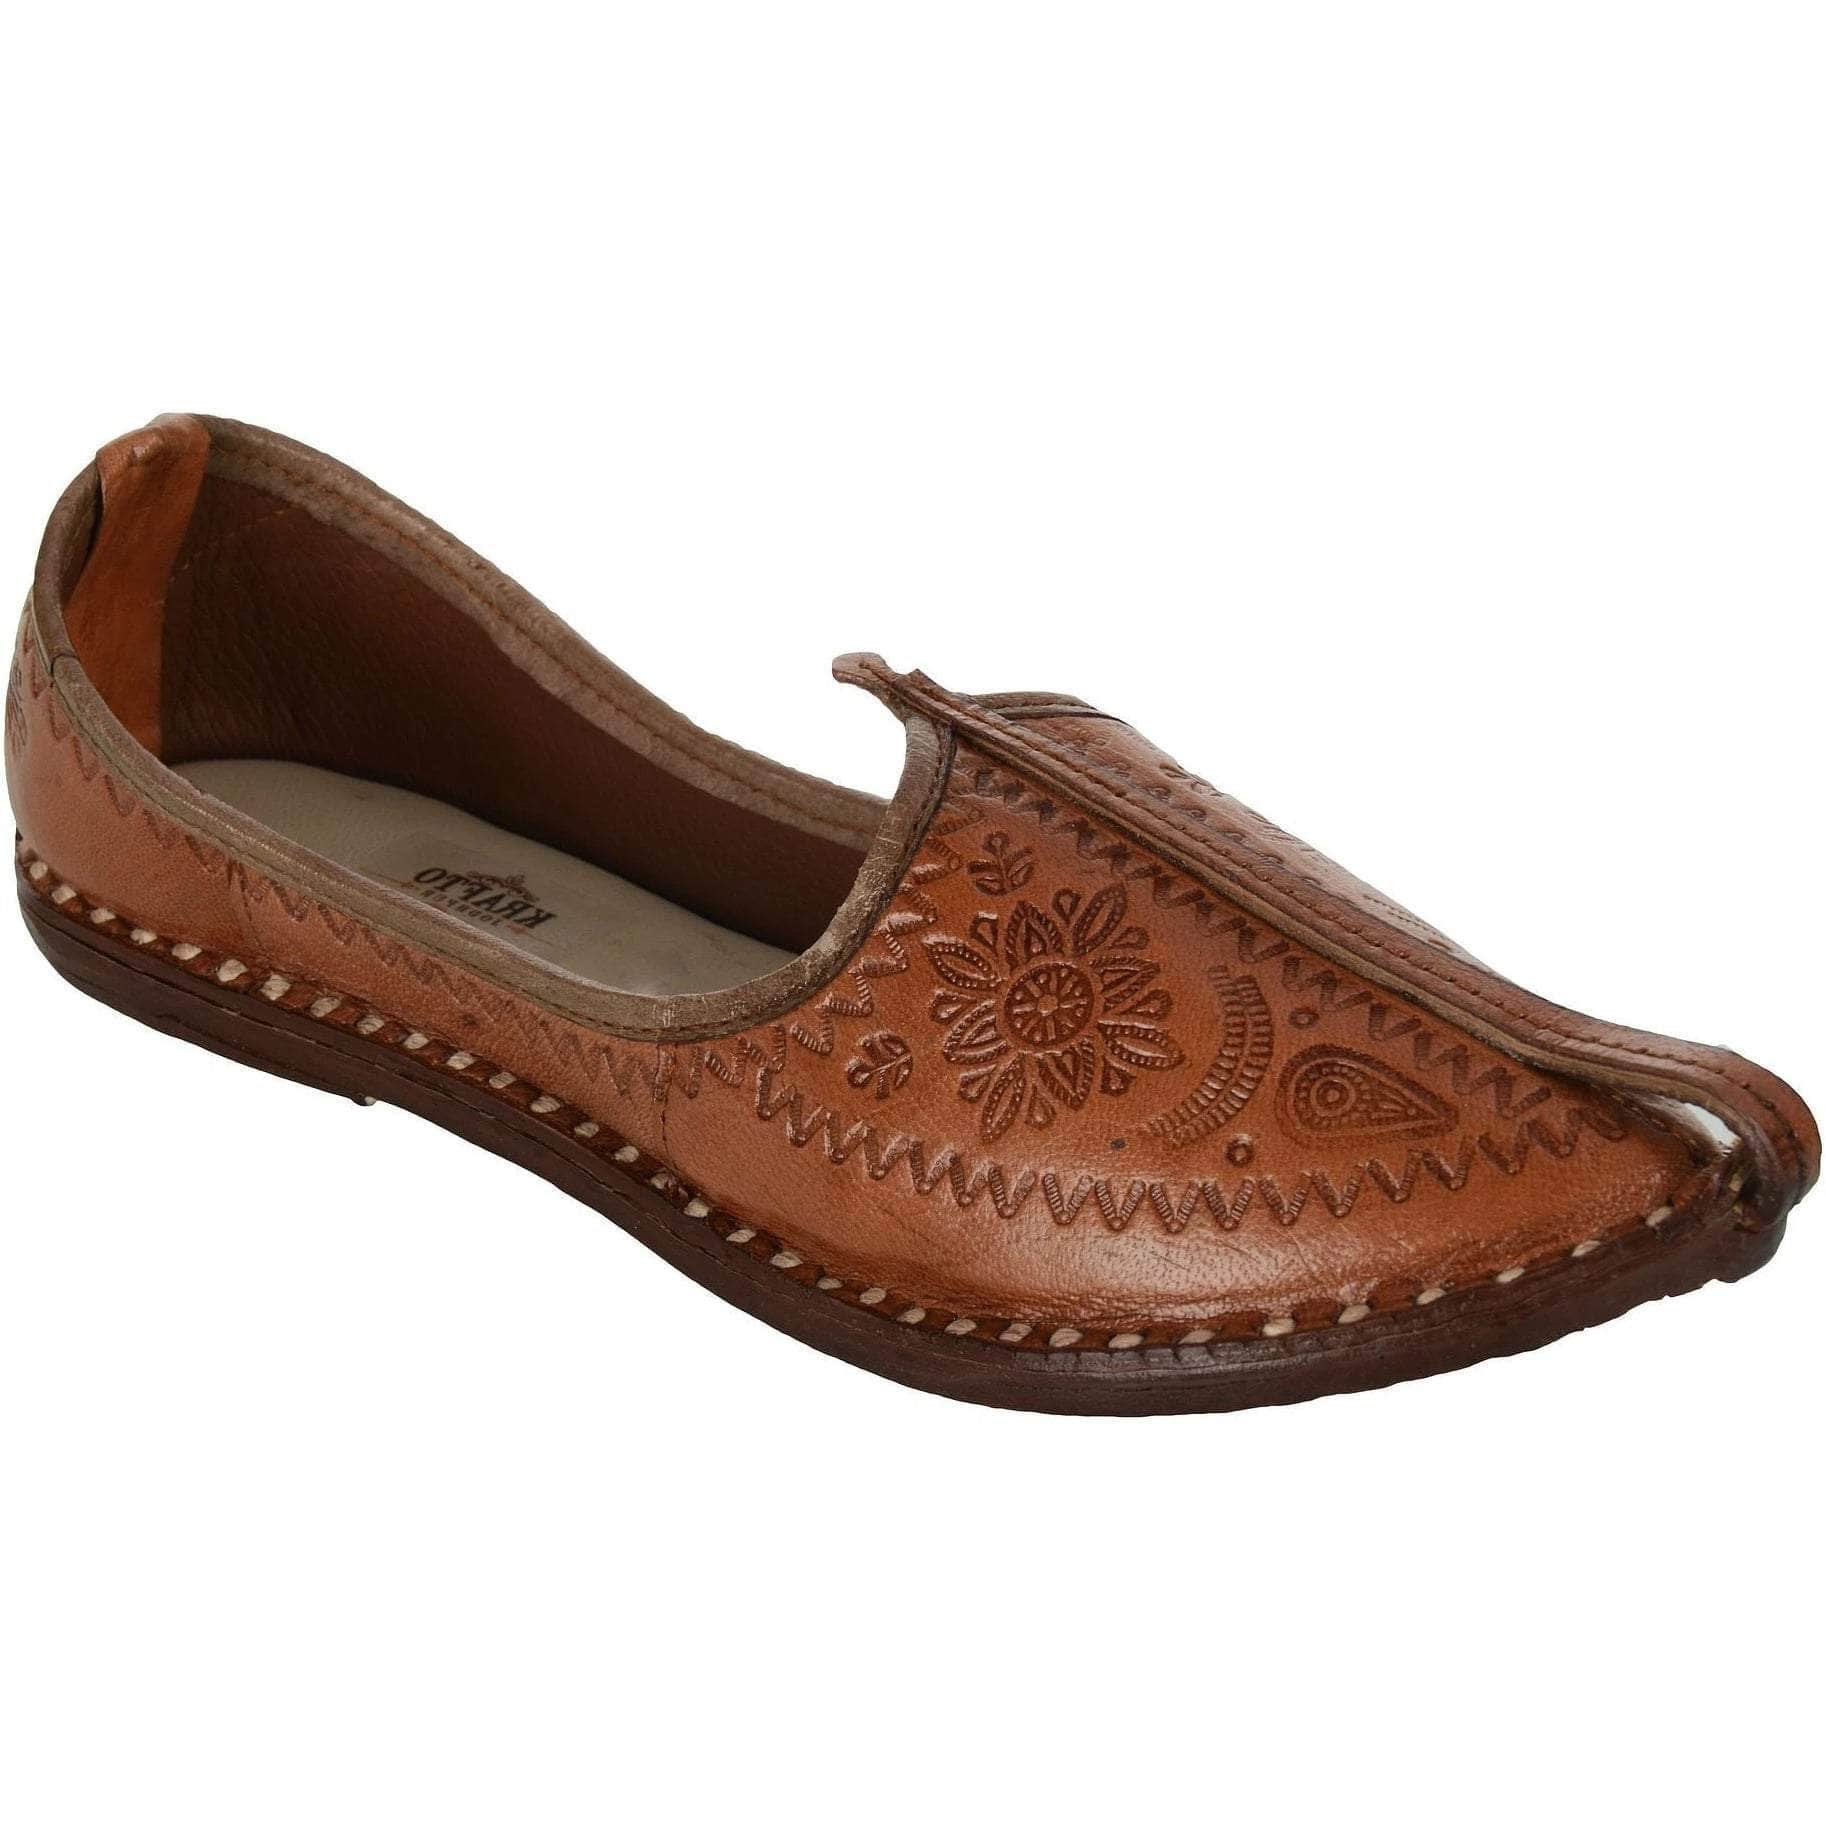 Walkers Brand Men's Mojari Jutti Ethnic Slipons Casual Loafers Shoes M19-XL  Size 11, 12 , 13 UK (Black) :: RAJASHOES